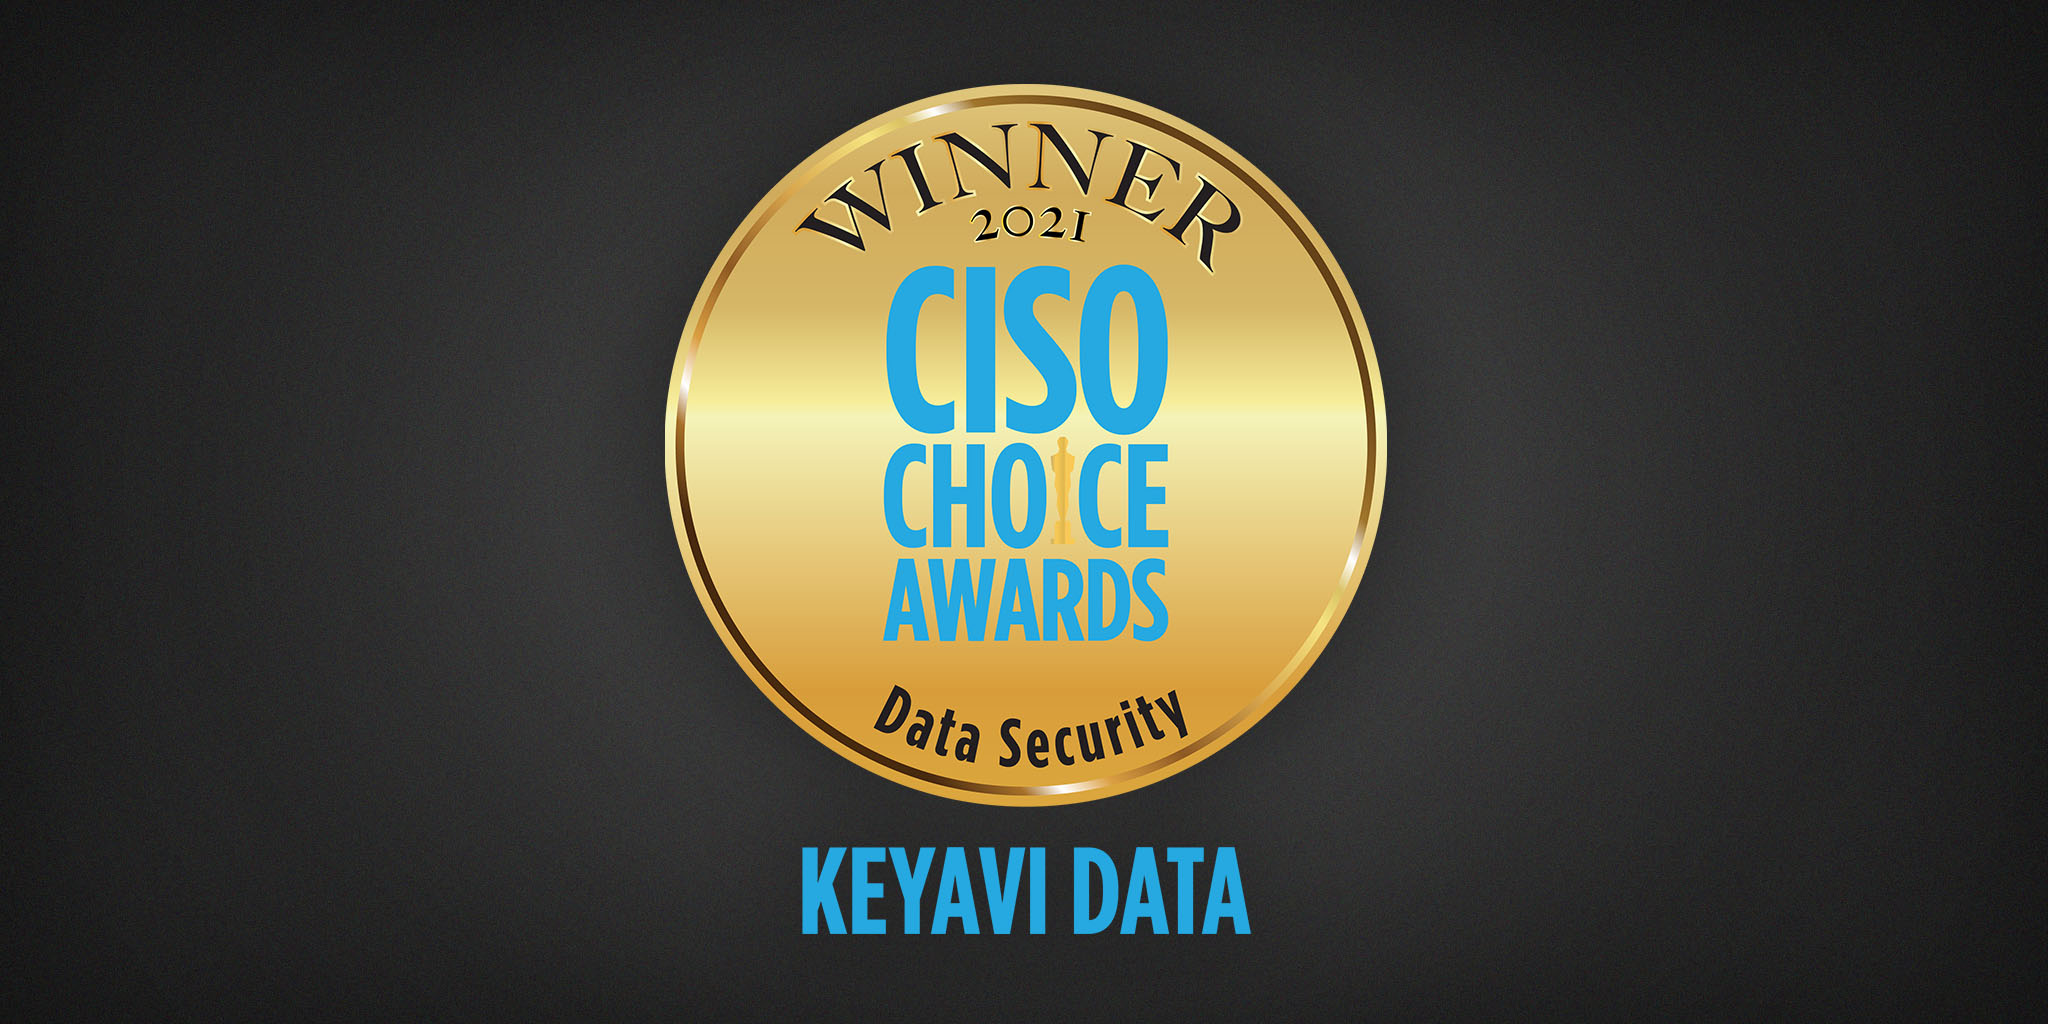 Keyavi Data Wins CISO Choice Award for Transformative Data Security Innovation